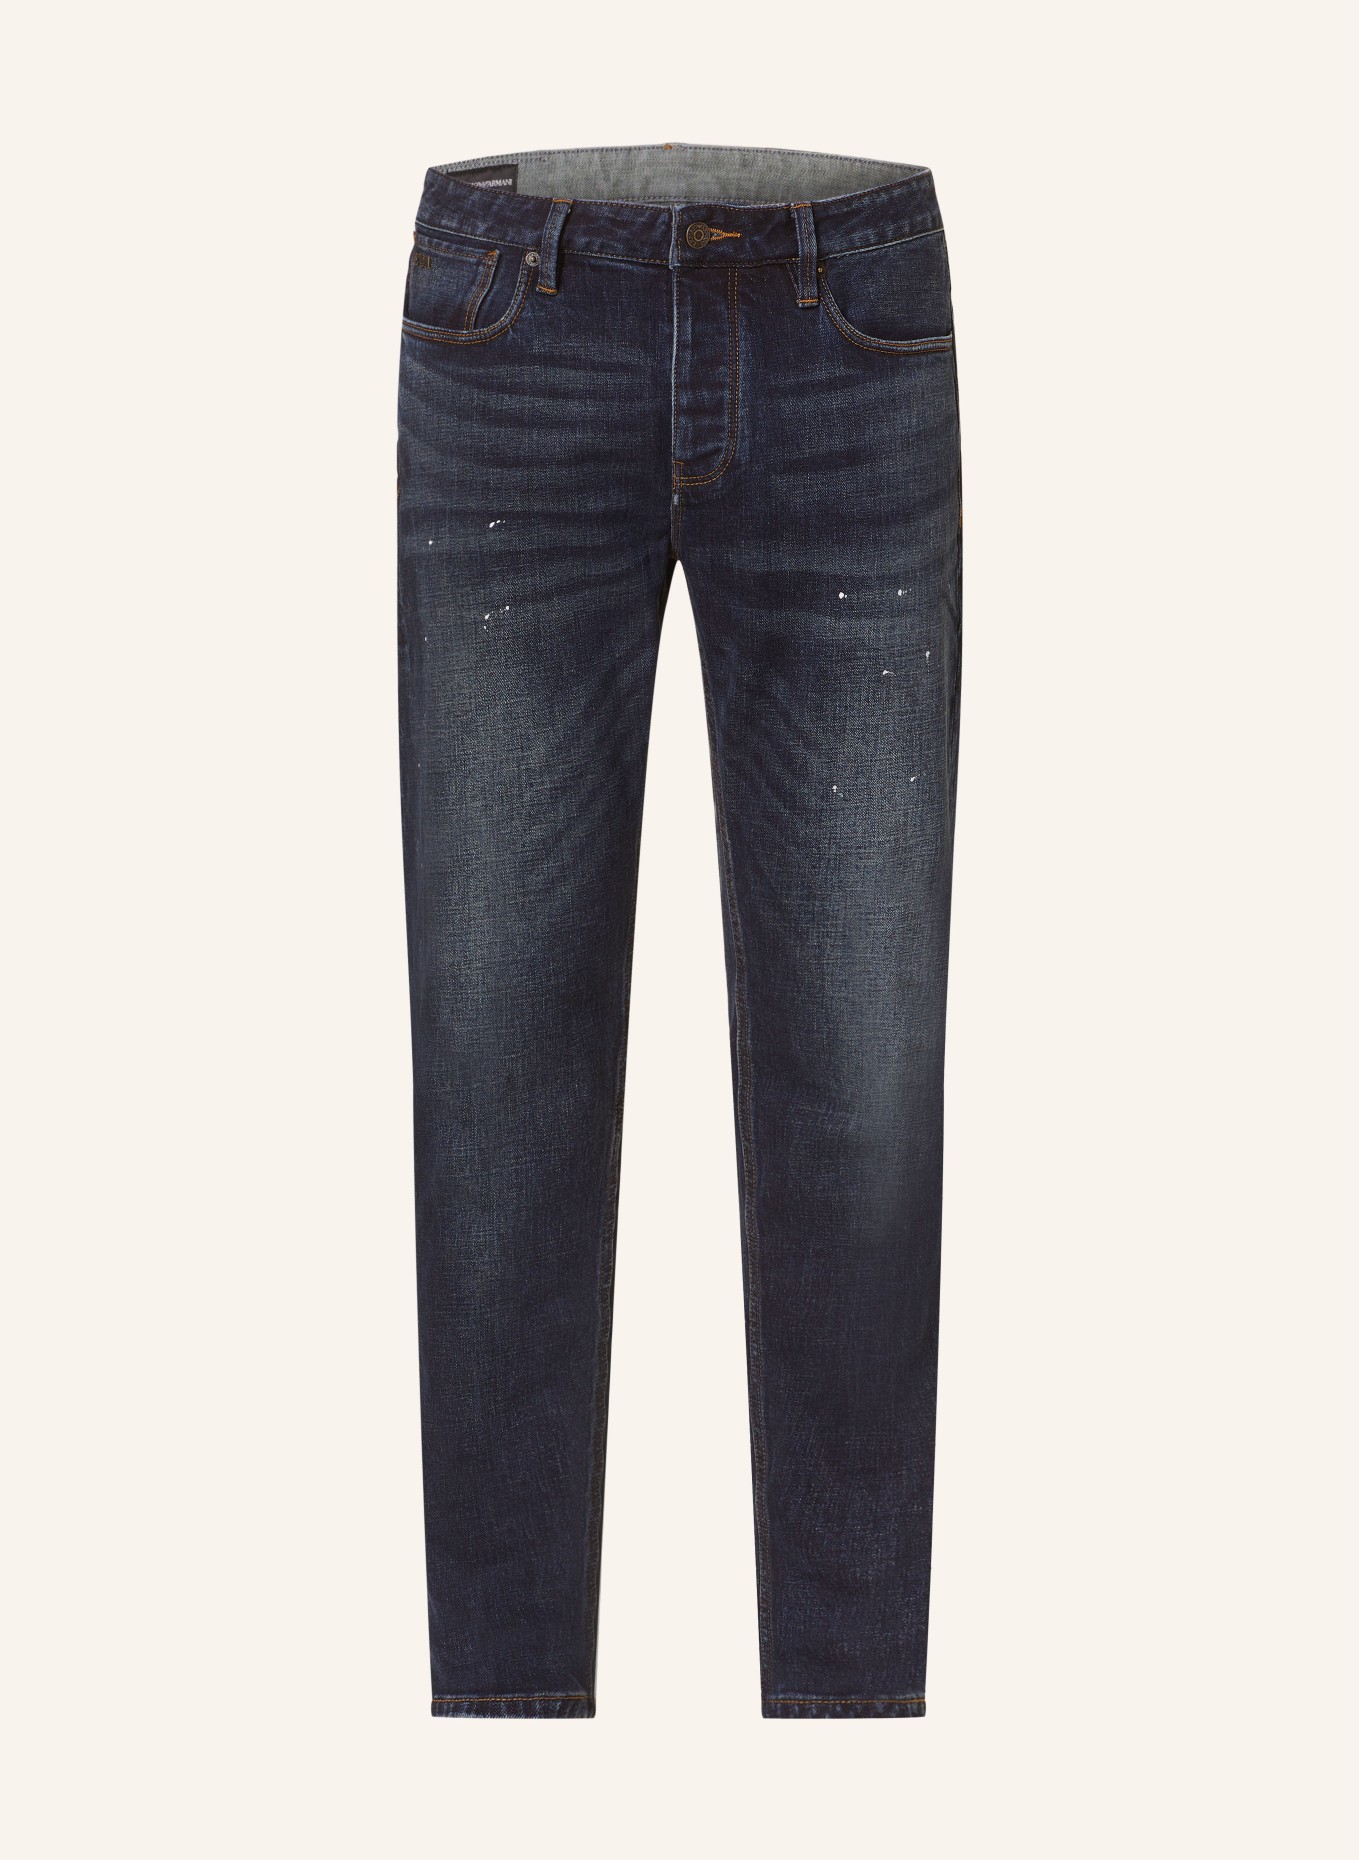 EMPORIO ARMANI Jeans Slim Fit, Farbe: 0941 DENIM BLU (Bild 1)